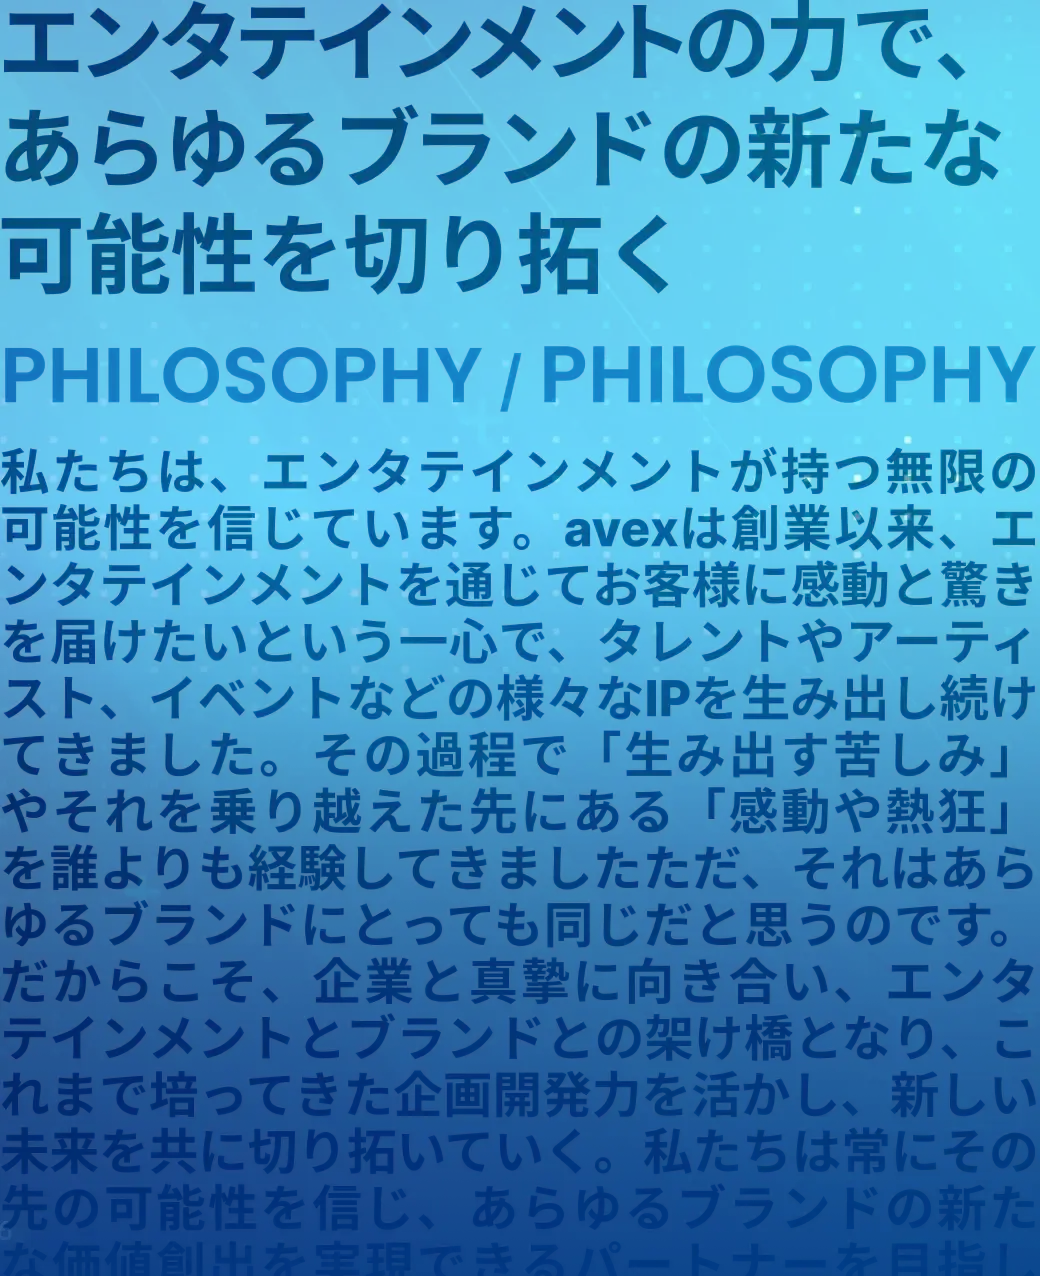 Philosophy 企業理念